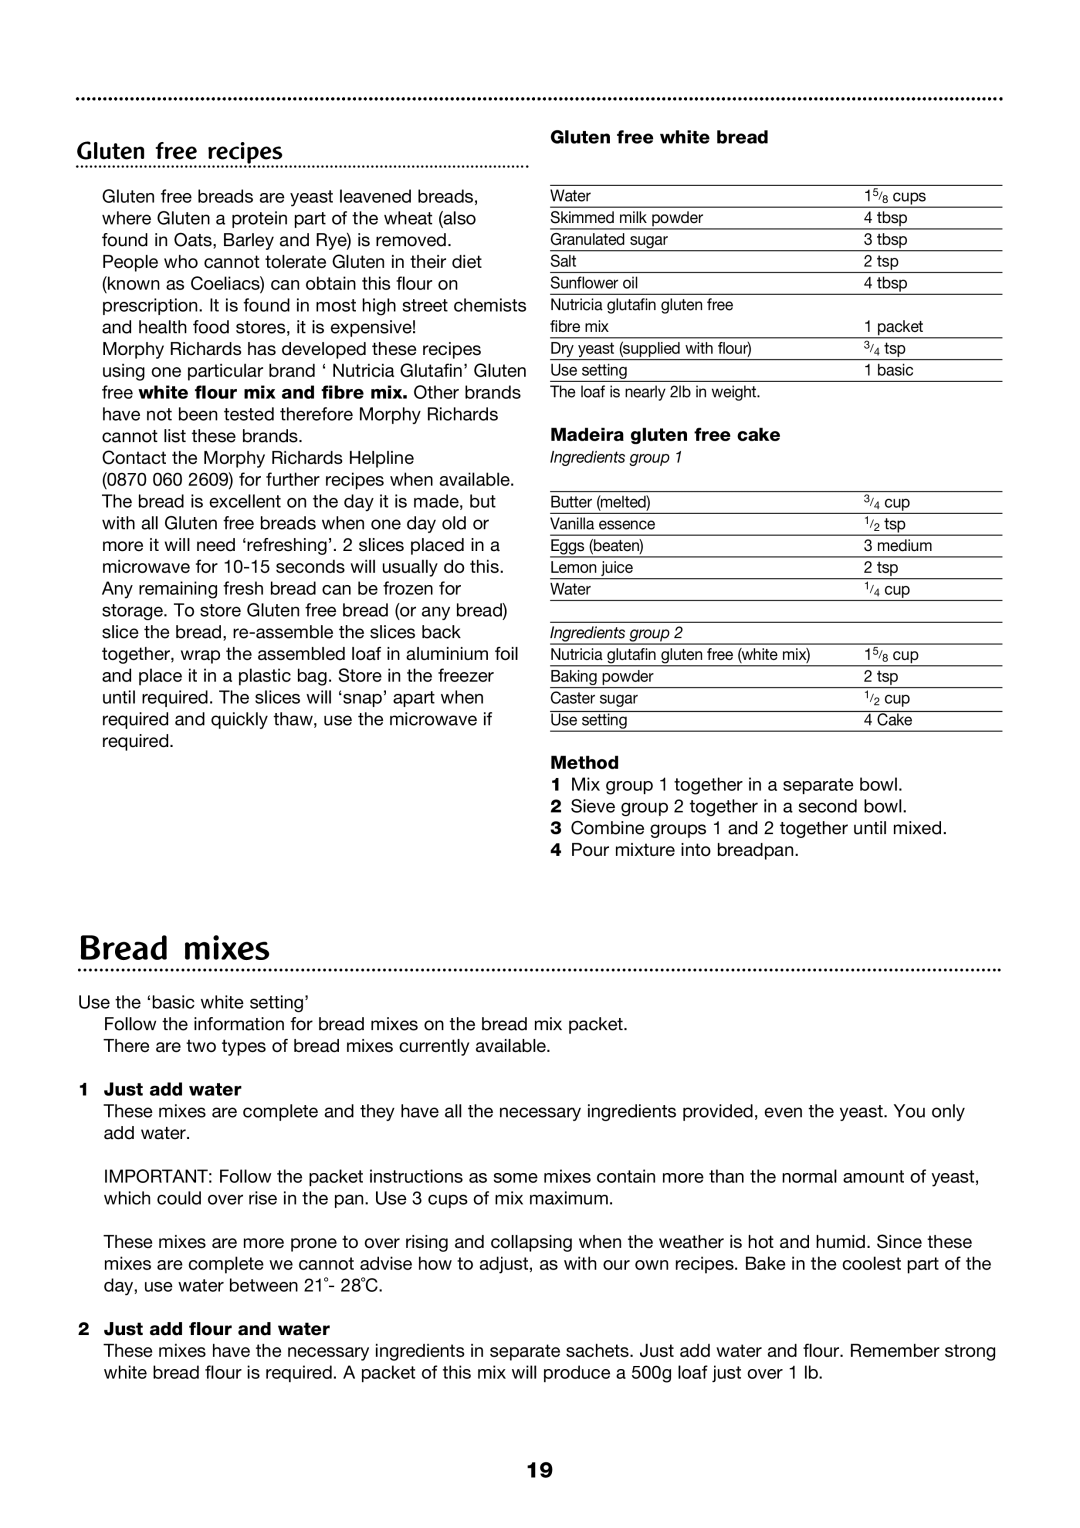 Morphy Richards Compact breadmaker manual Bread mixes, Gluten free recipes 